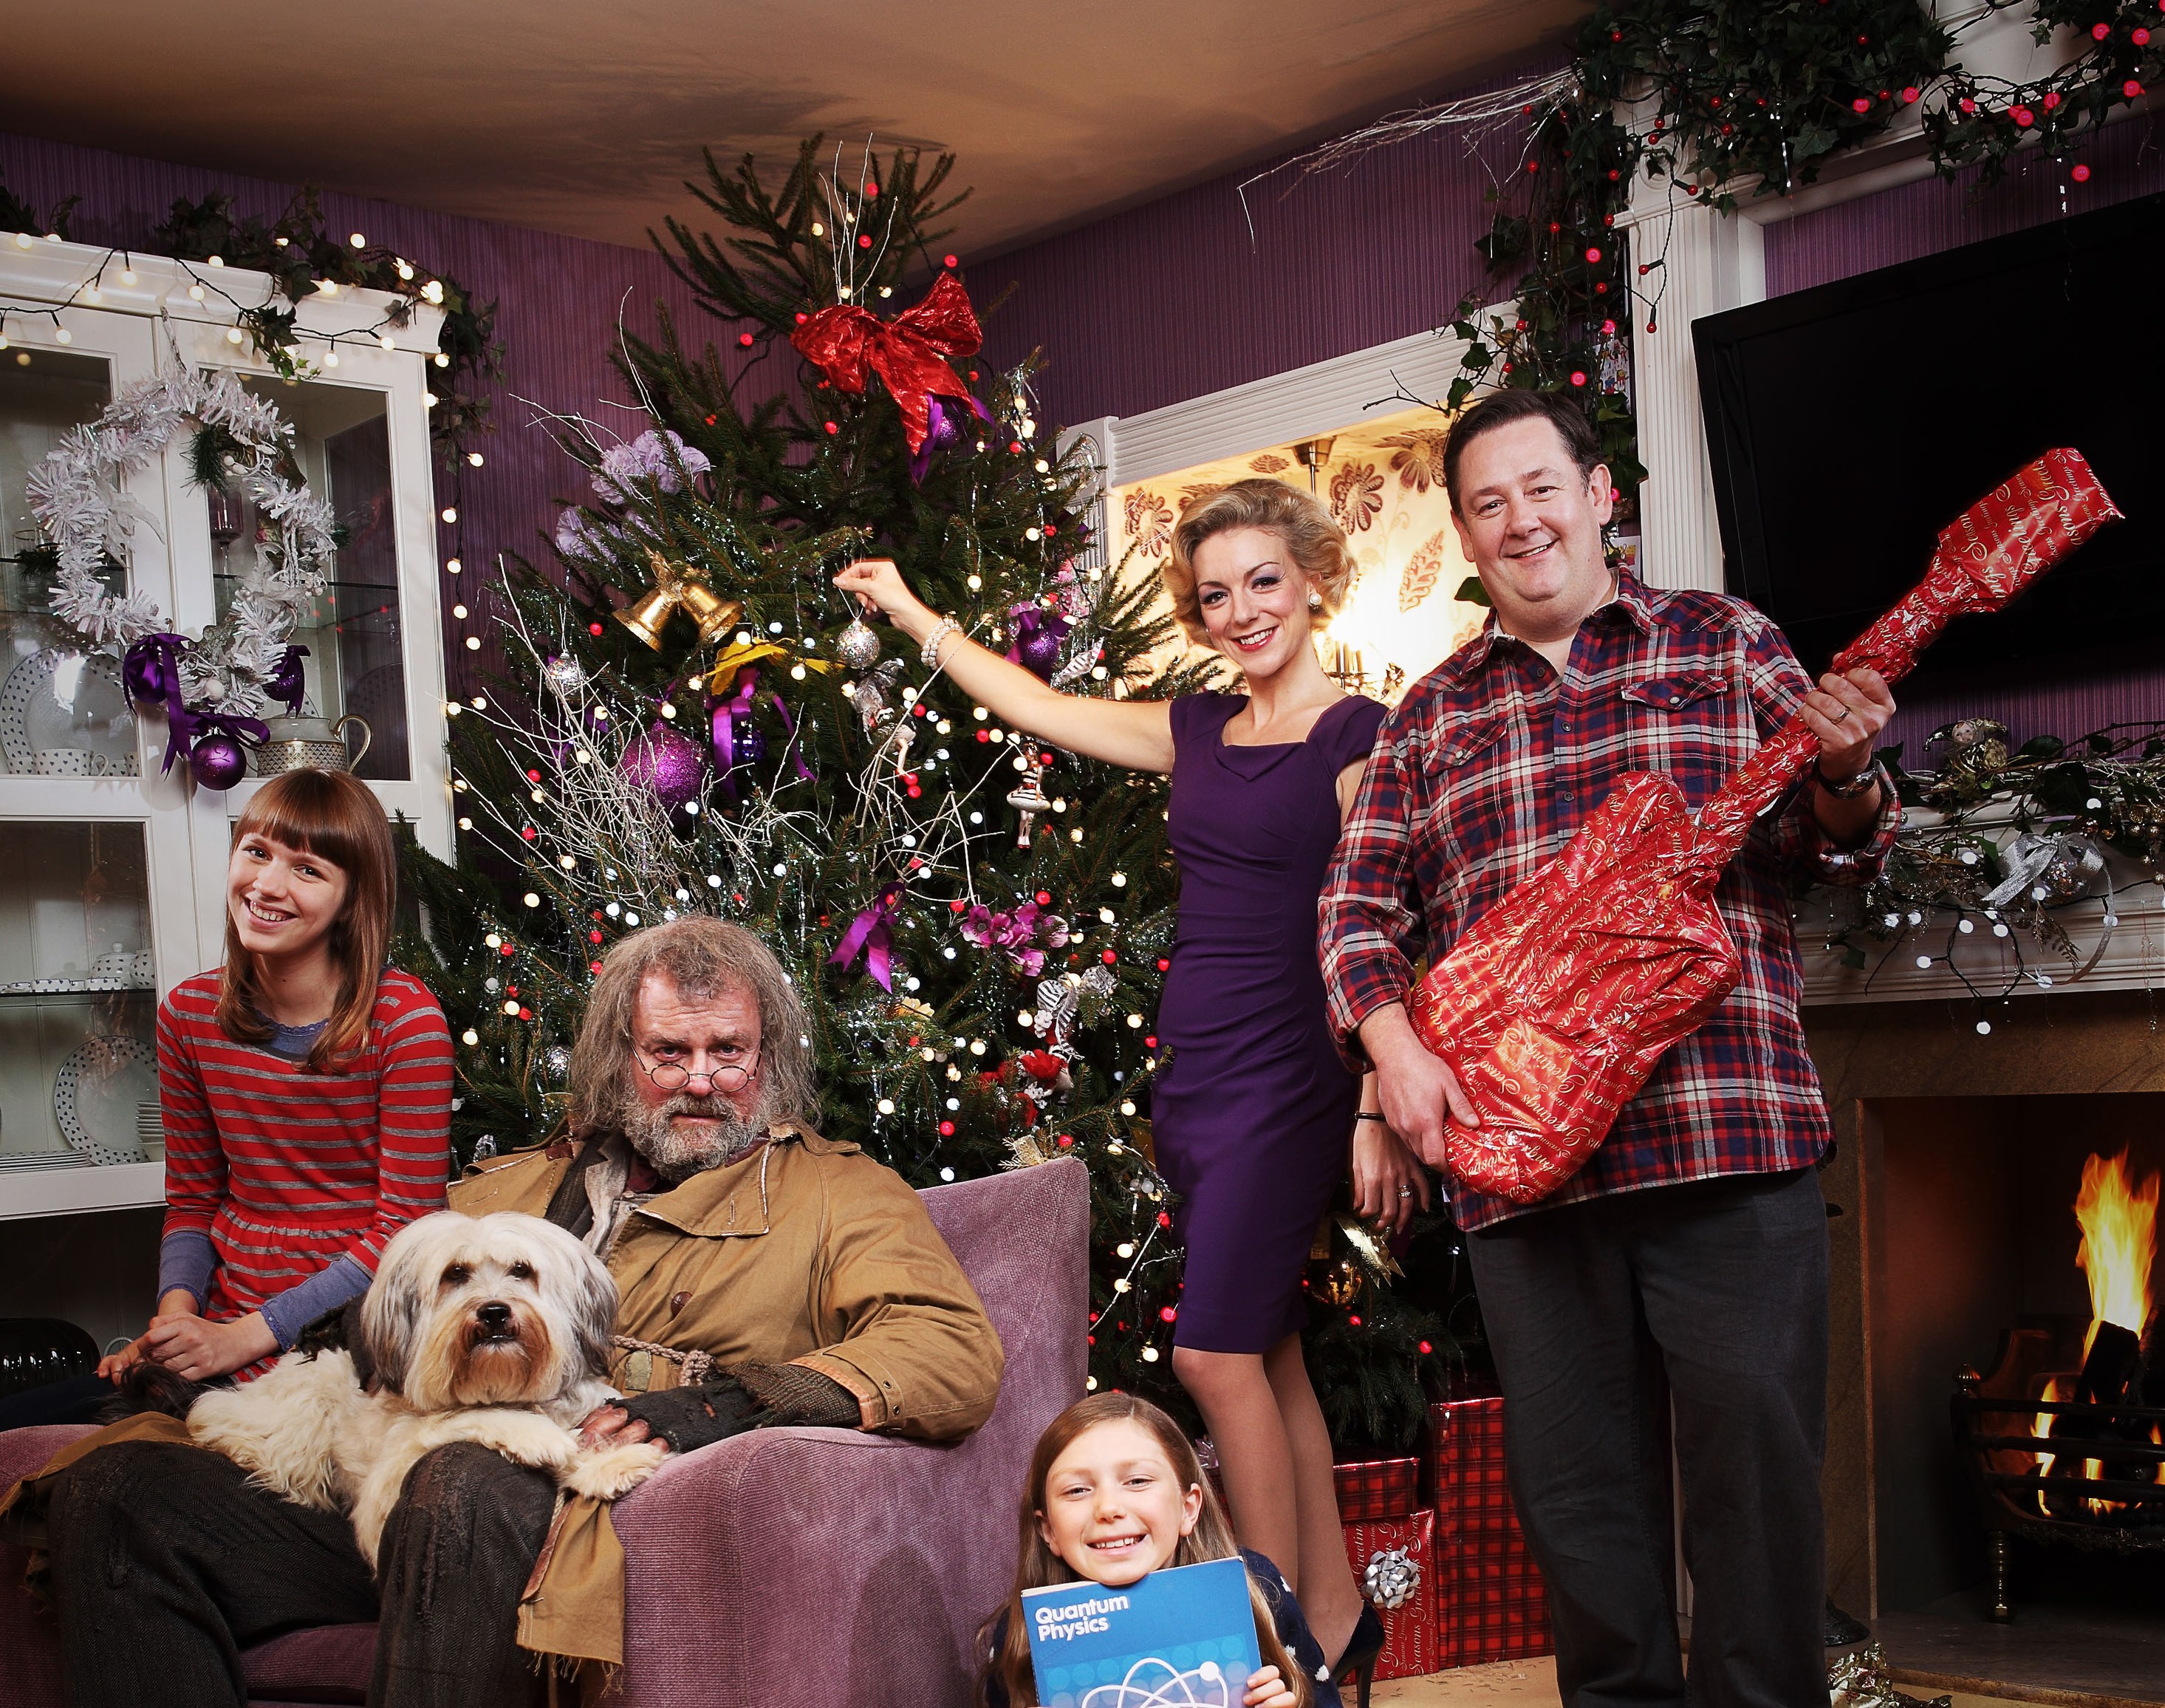 The "Mr. Stink" cast, looking festive. (Photo:Courtesy of Gary Moyes/BBC)